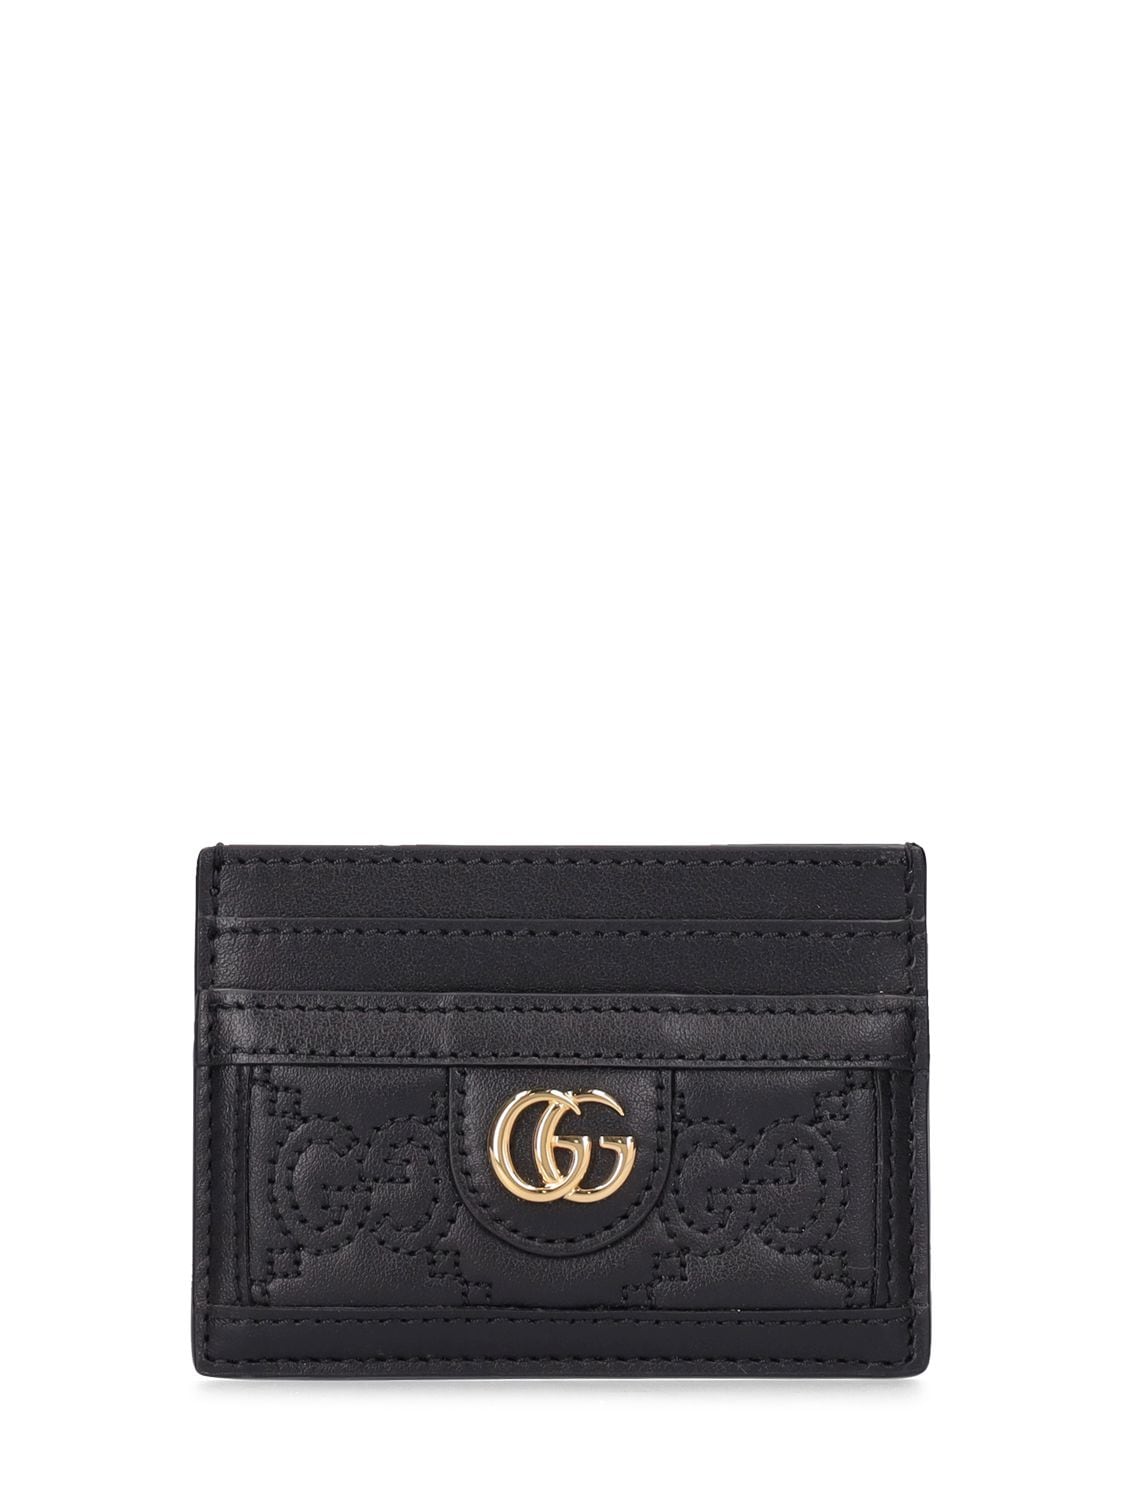 Image of Gg Matelassé Leather Card Case